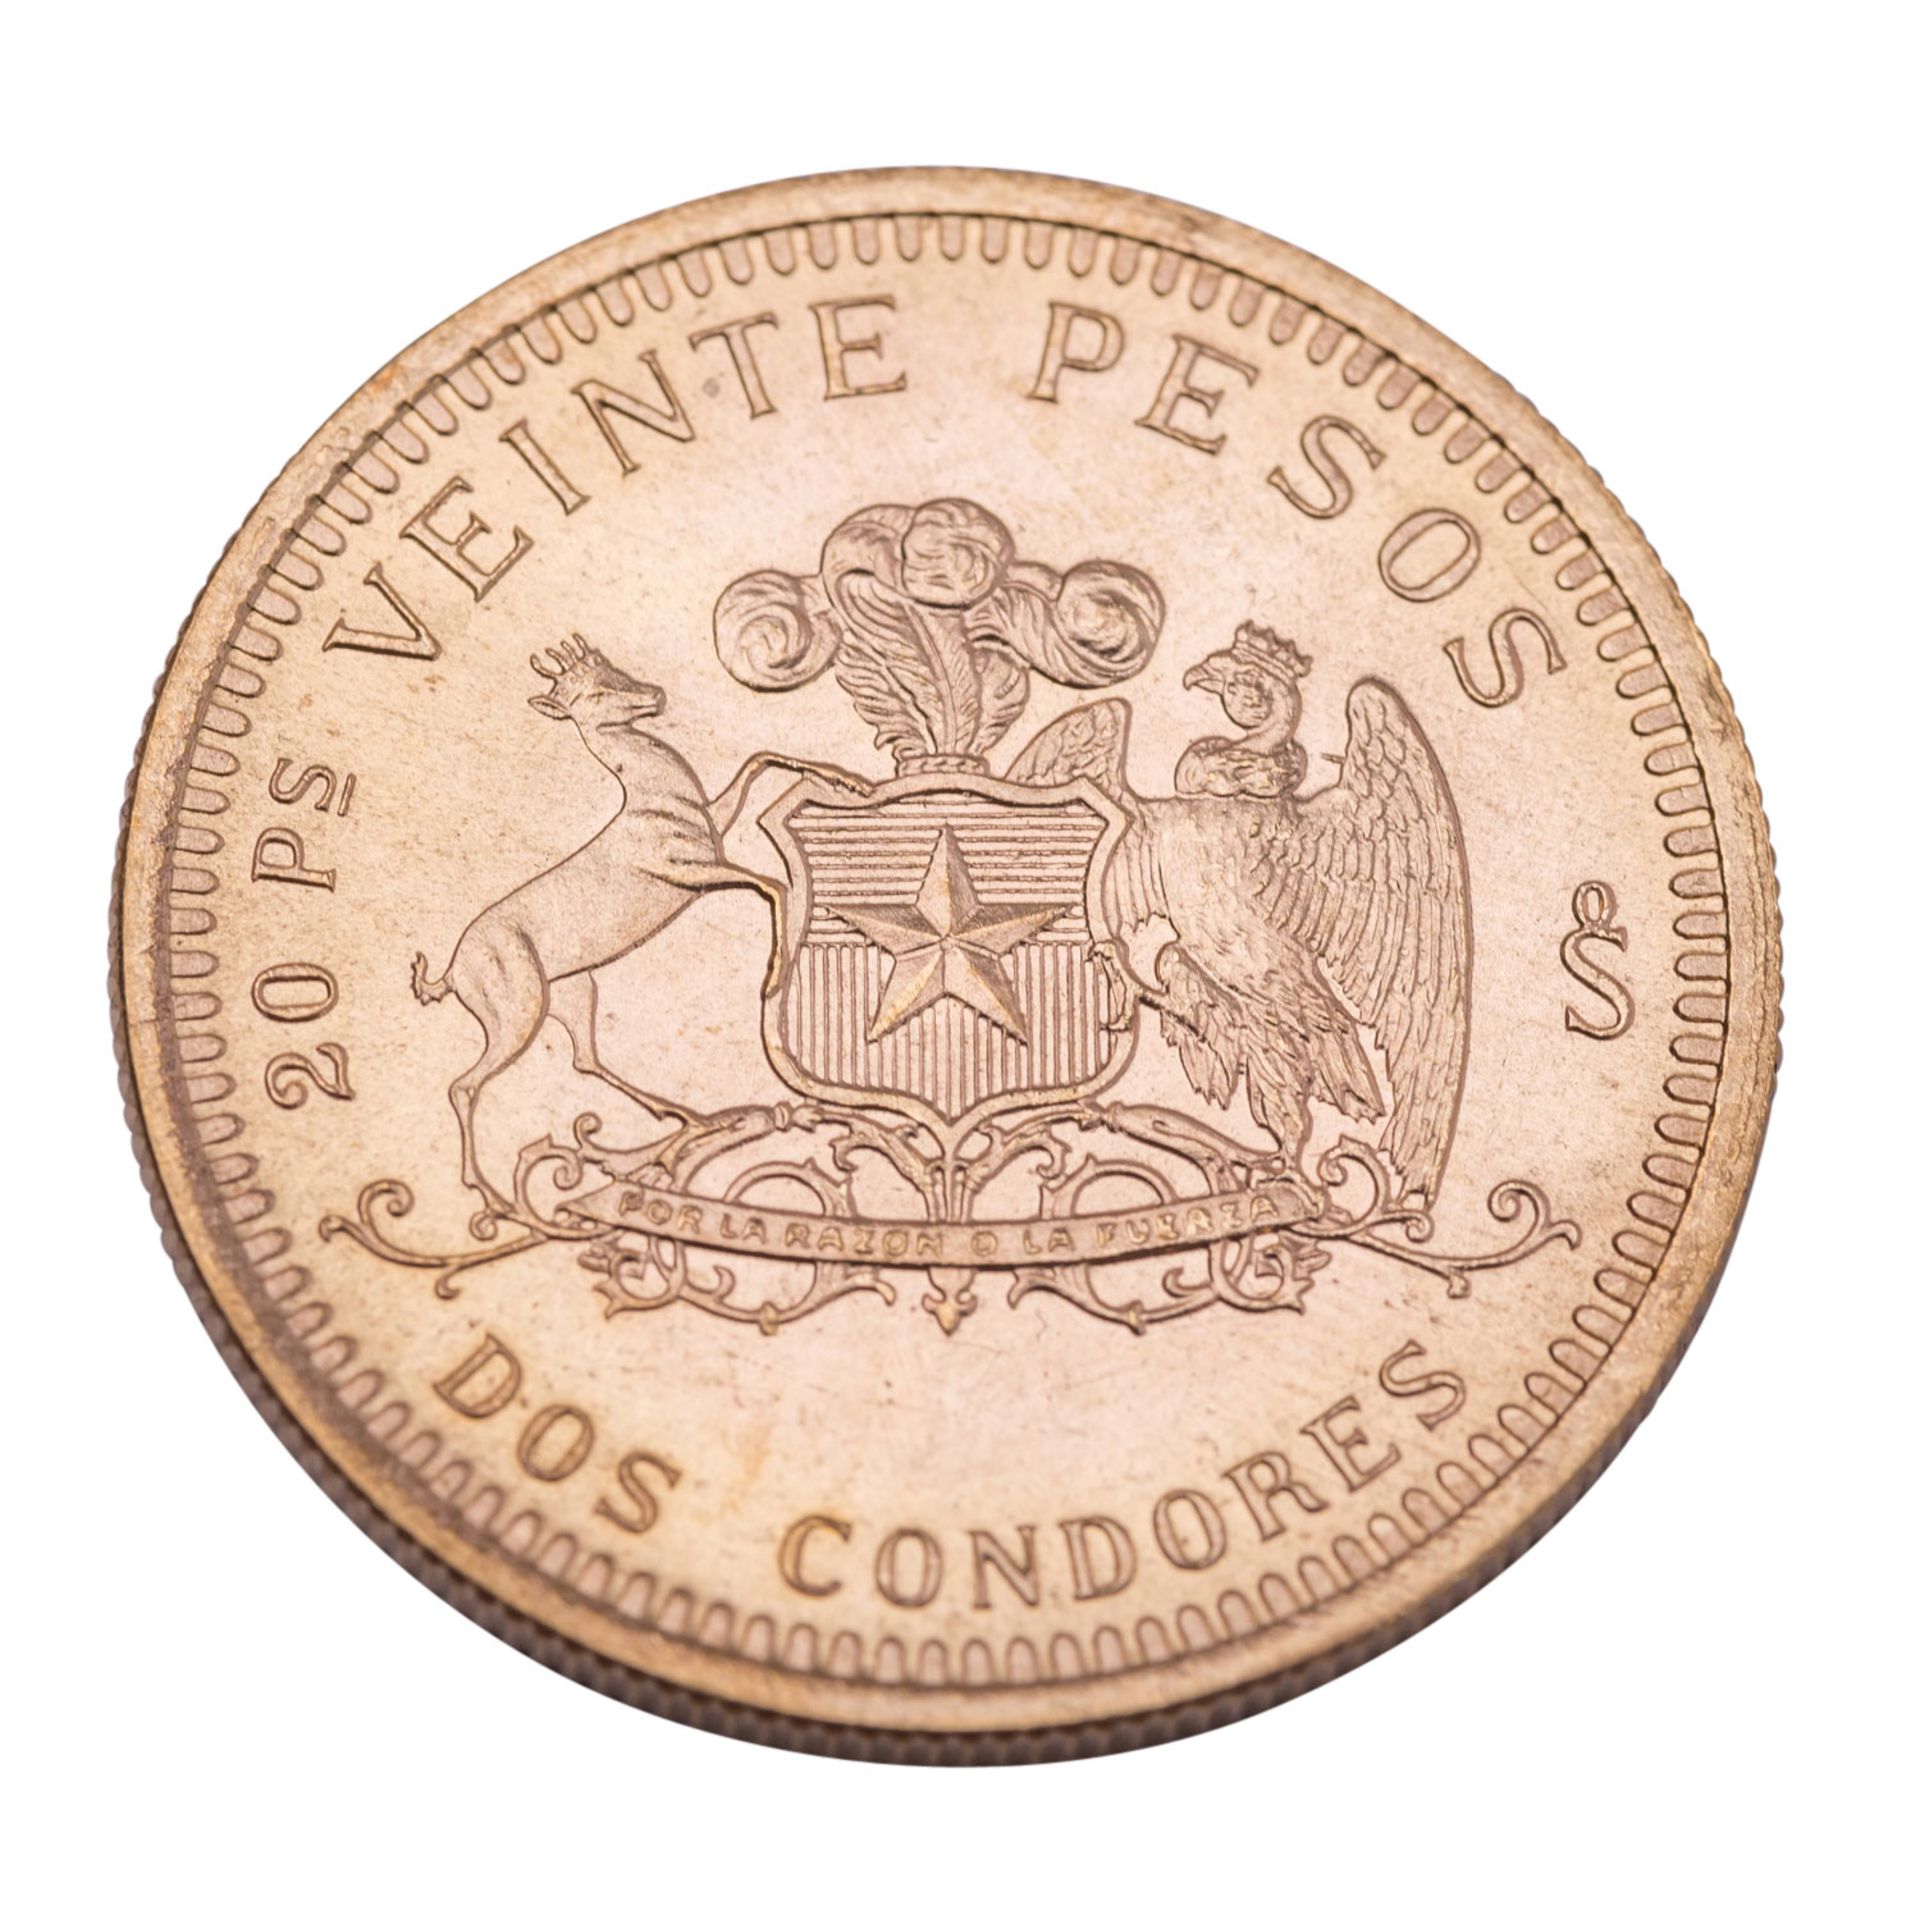 Chile - 20 Pesos 1976, Liberty, GOLD, - Image 2 of 2